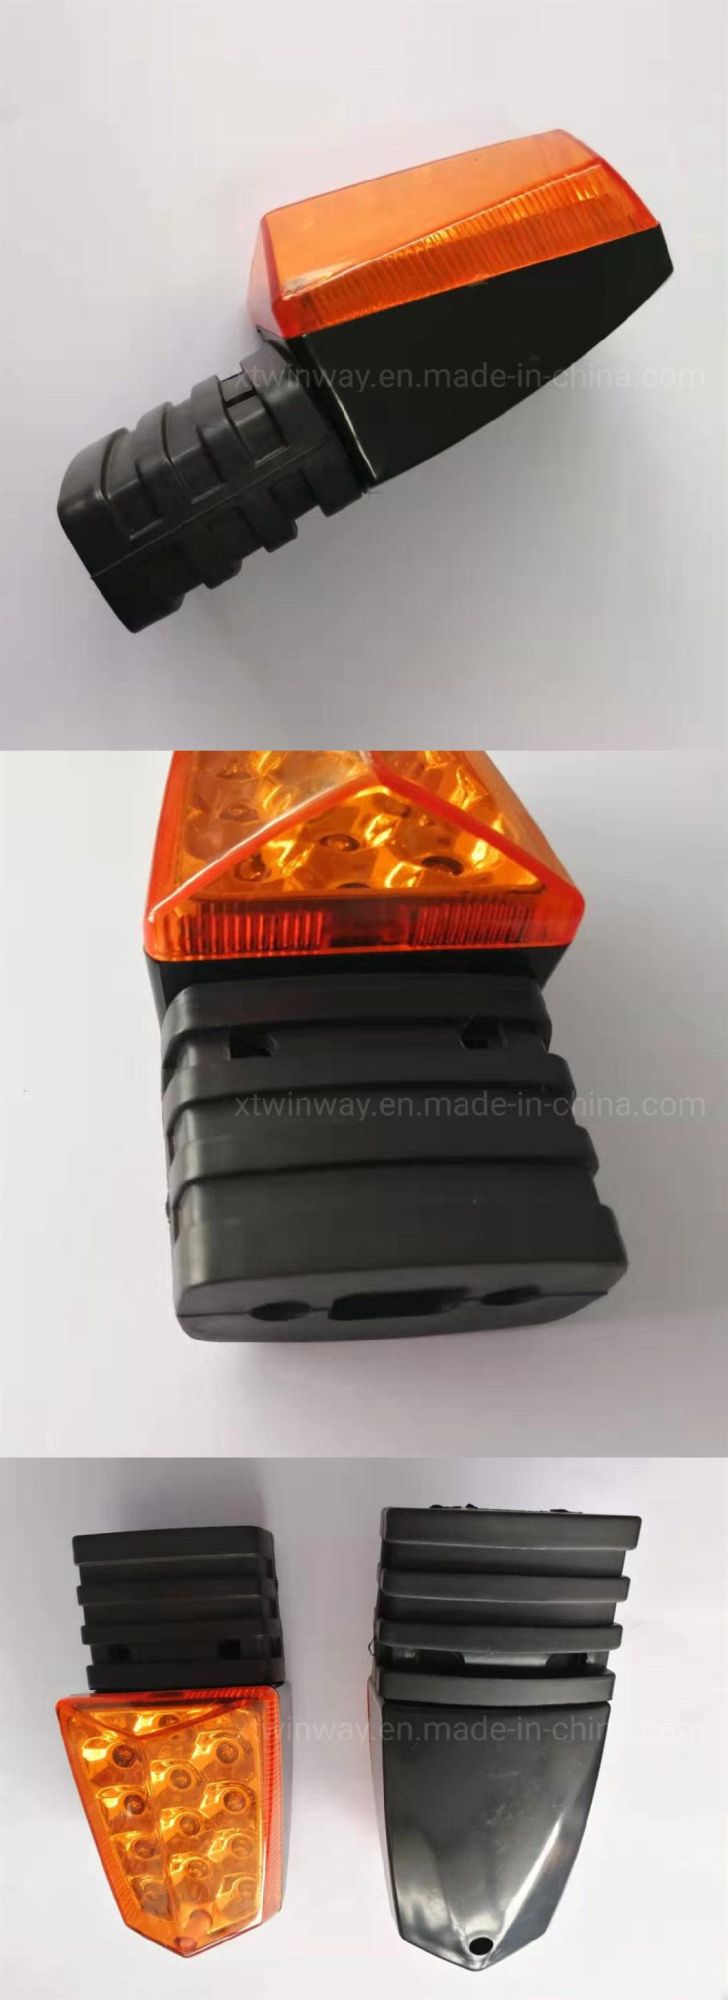 Ww-6032 Wy125 LED Winker Cornering Lamp Indicator Motorcycle Parts Signal Light